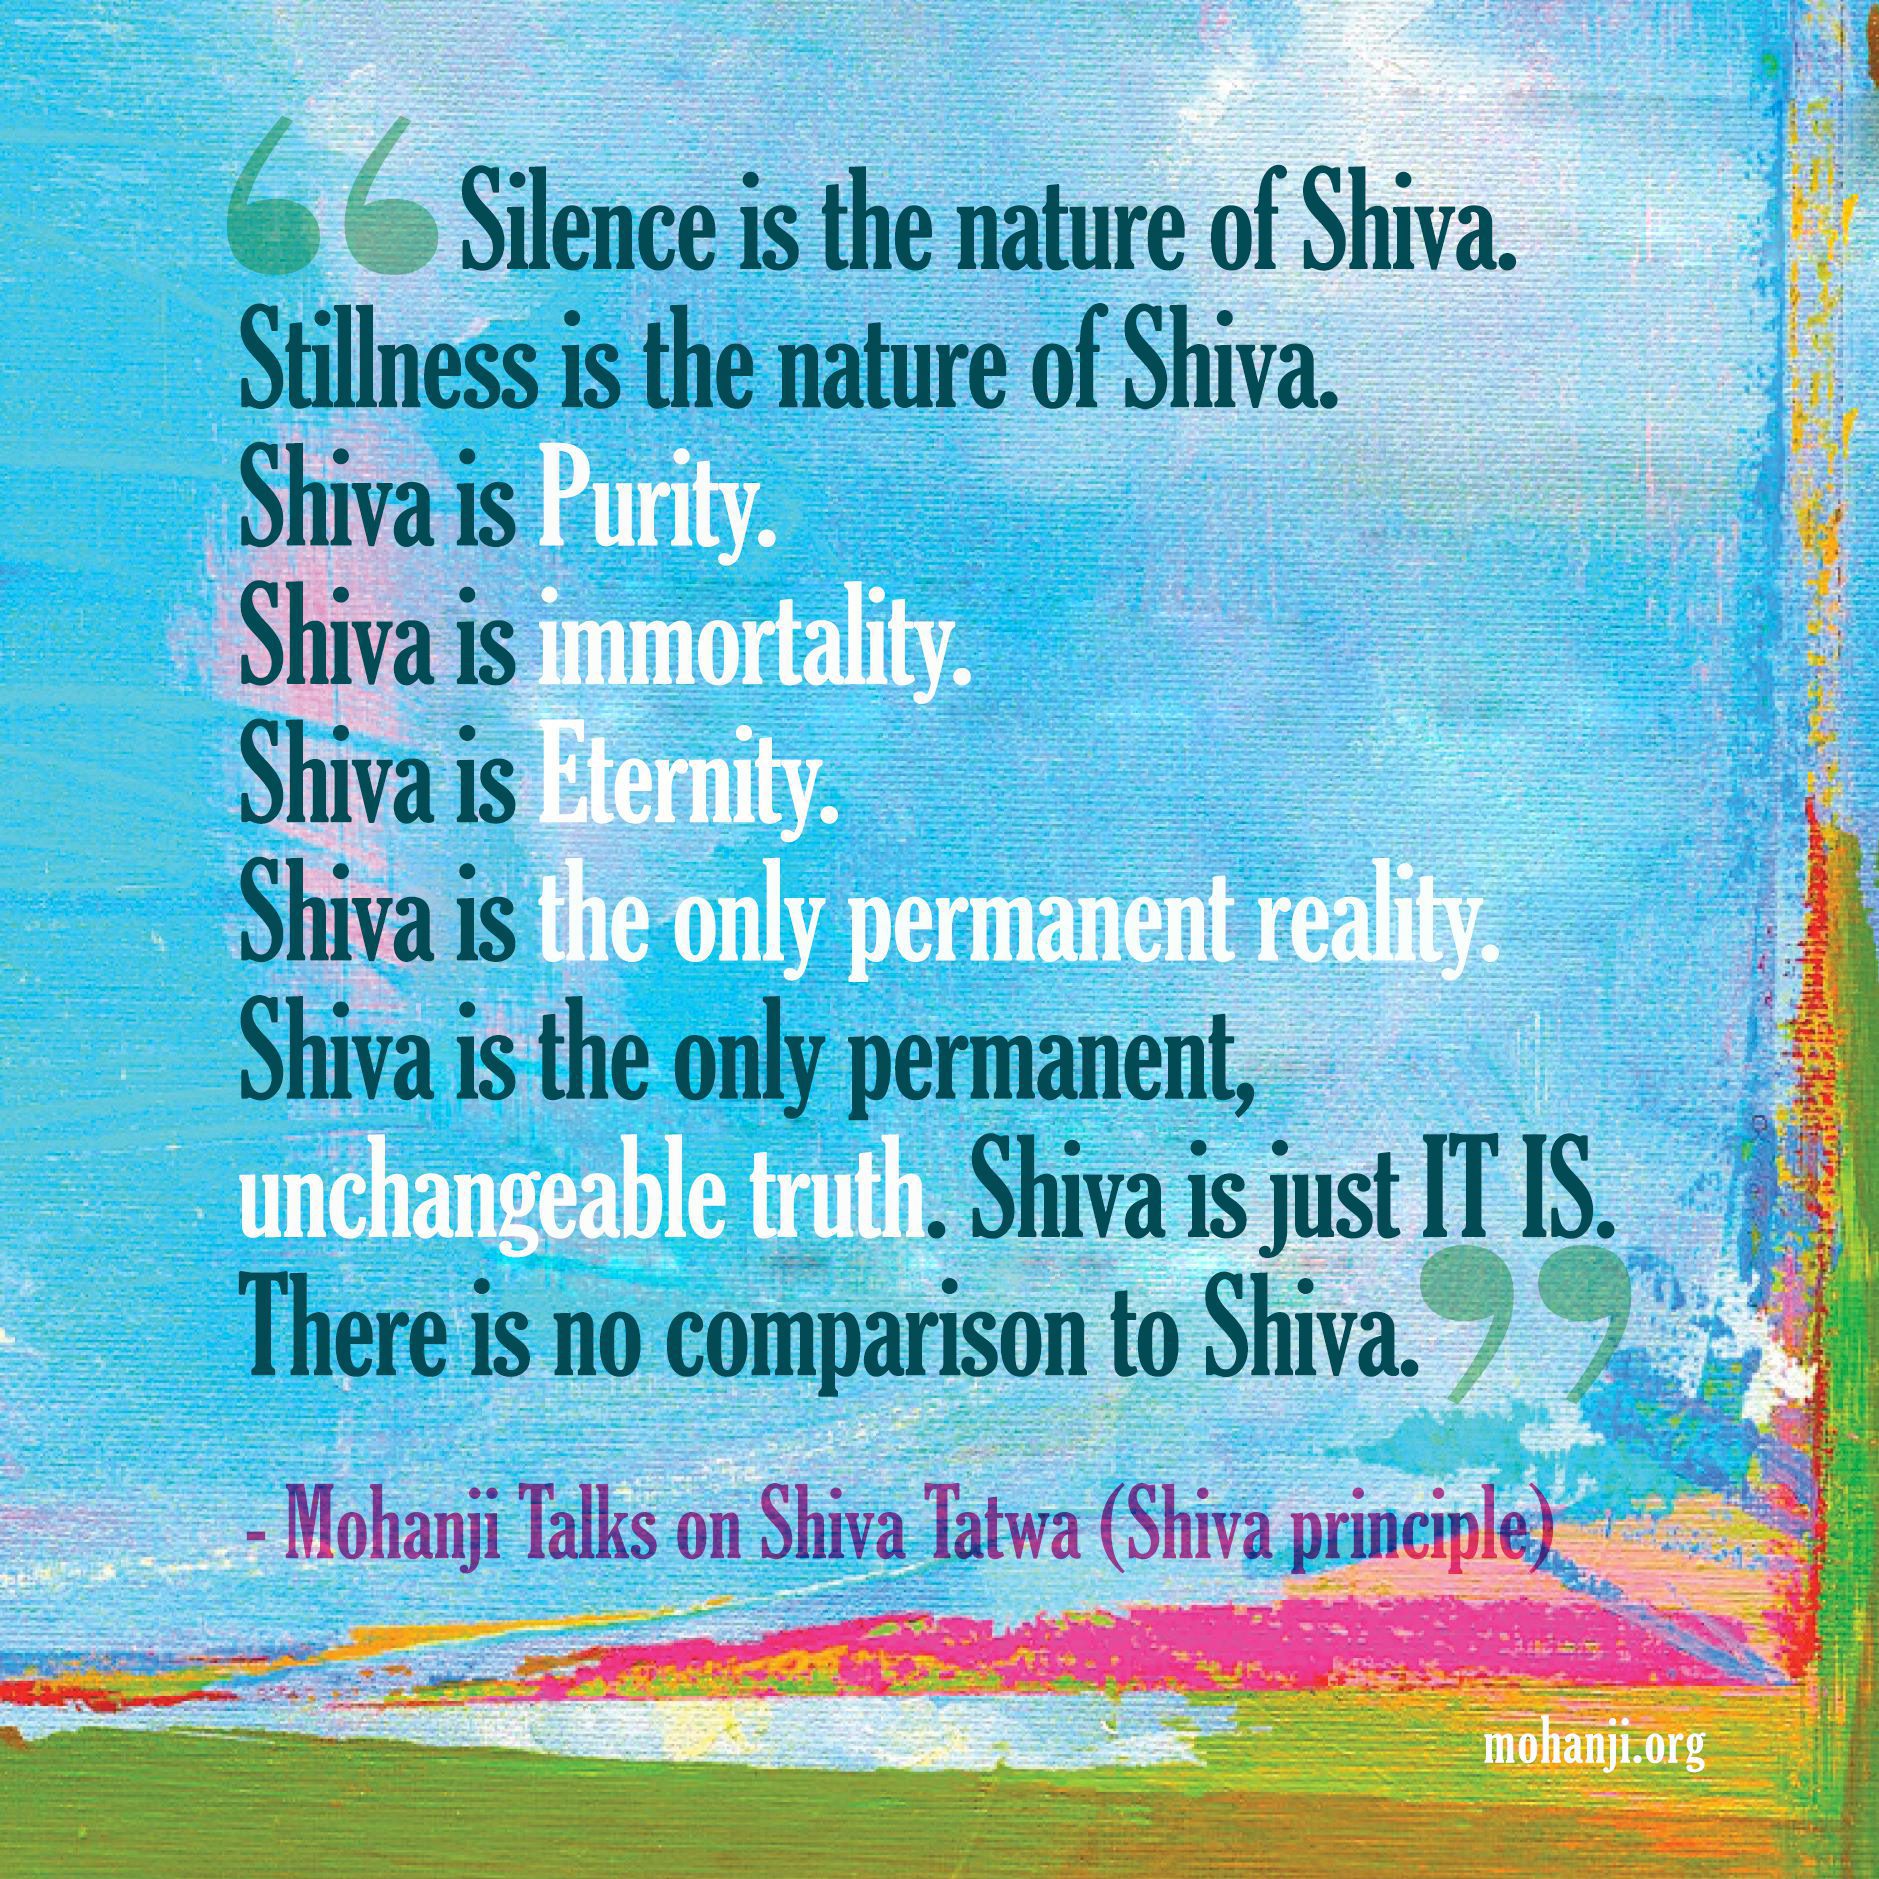 Mohanji quote - Shiva Tattwa11 - Shiva principle